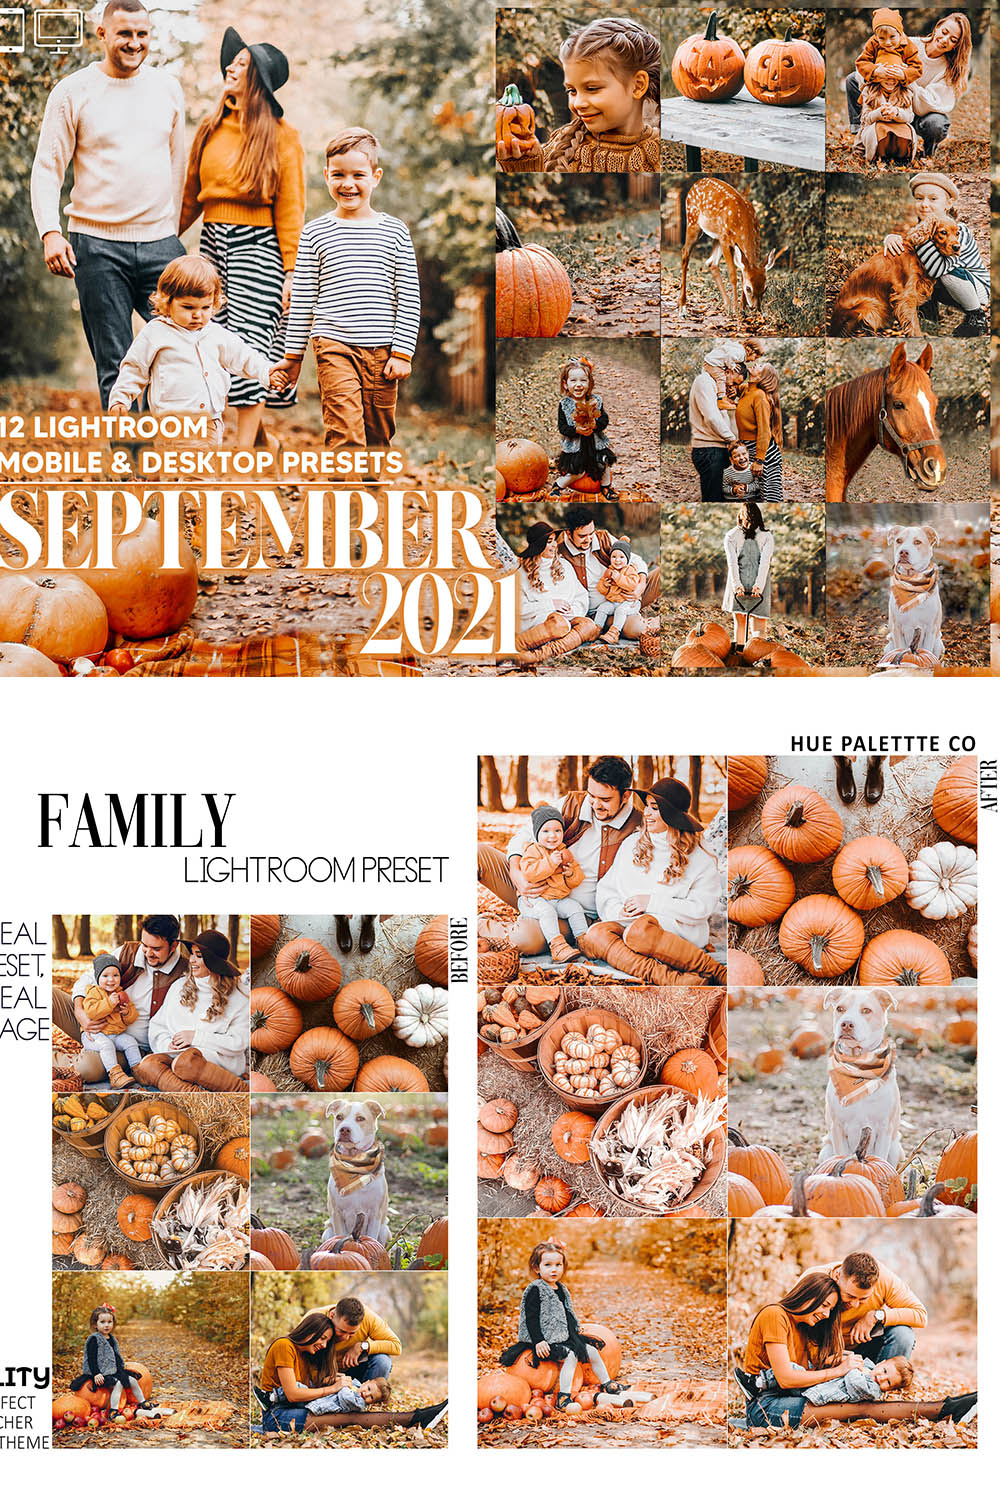 12 September 2021 Lightroom Presets, Pumpkin Mobile Preset, Autumn Desktop, Lifestyle Portrait Theme Instagram LR Filter DNG Orange Fall pinterest preview image.